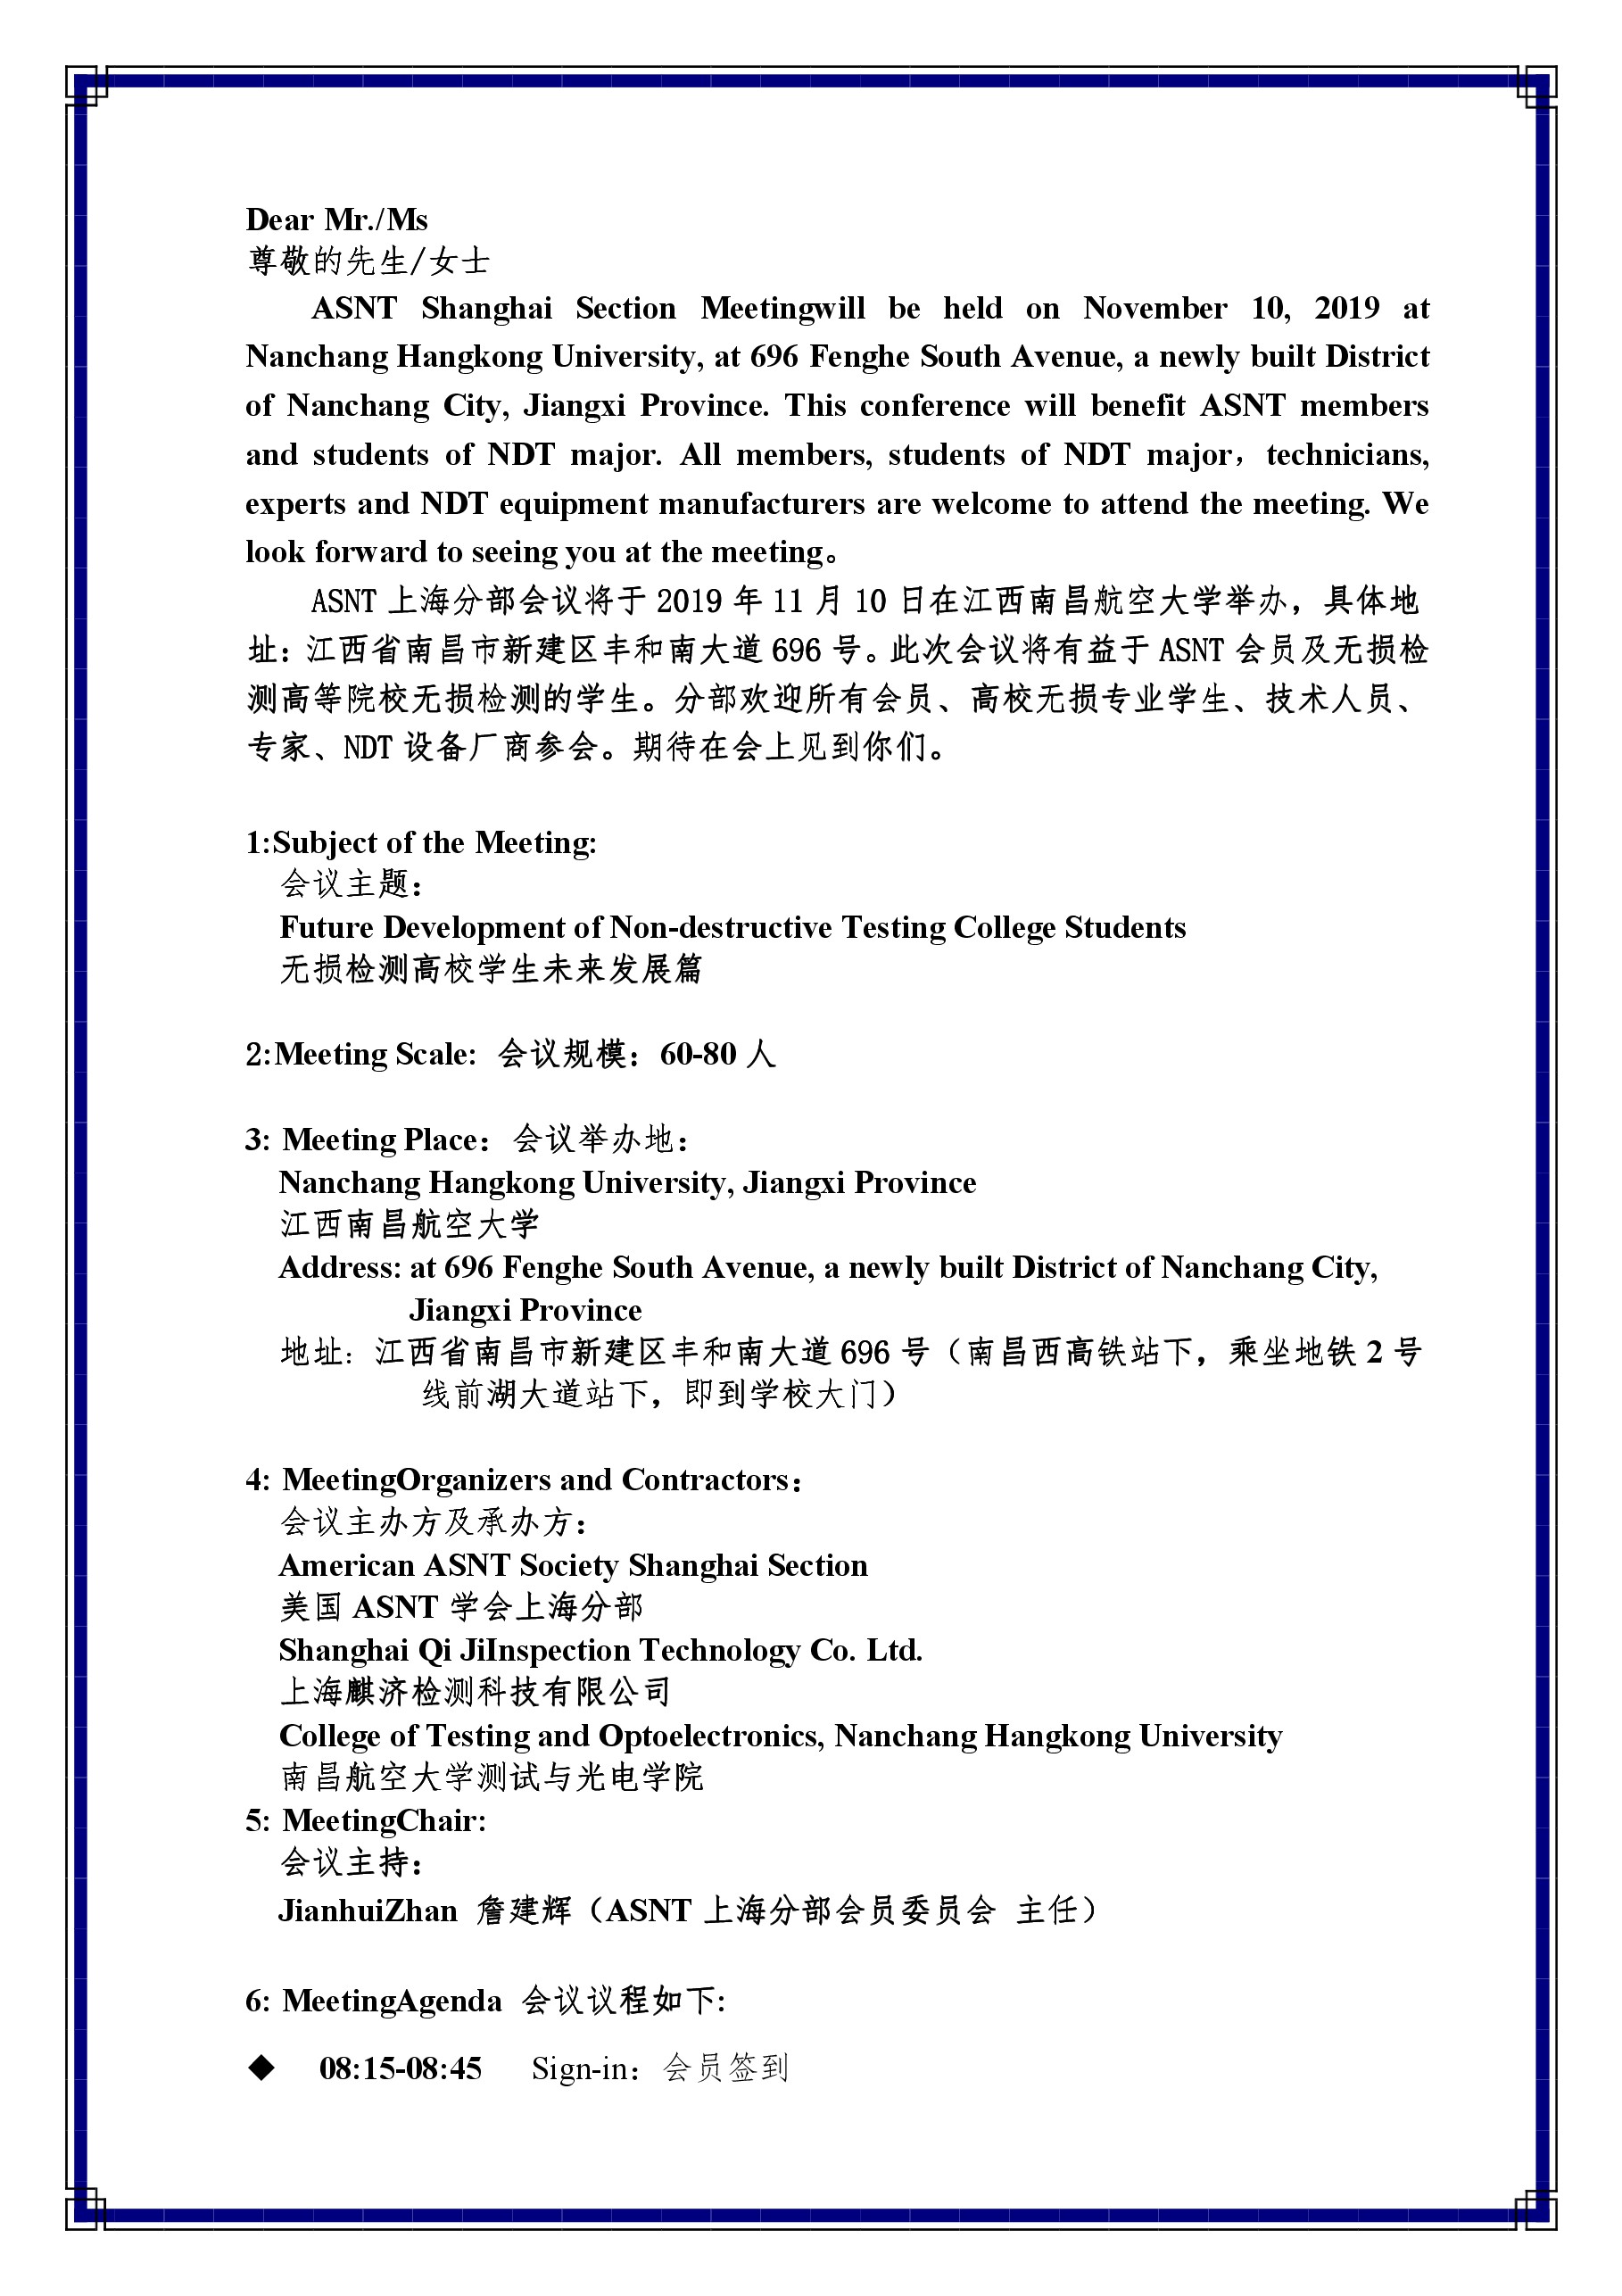 ASNT上海分部11月份会议-南昌航空大学高校发展篇-2-3-1-1-1.jpg